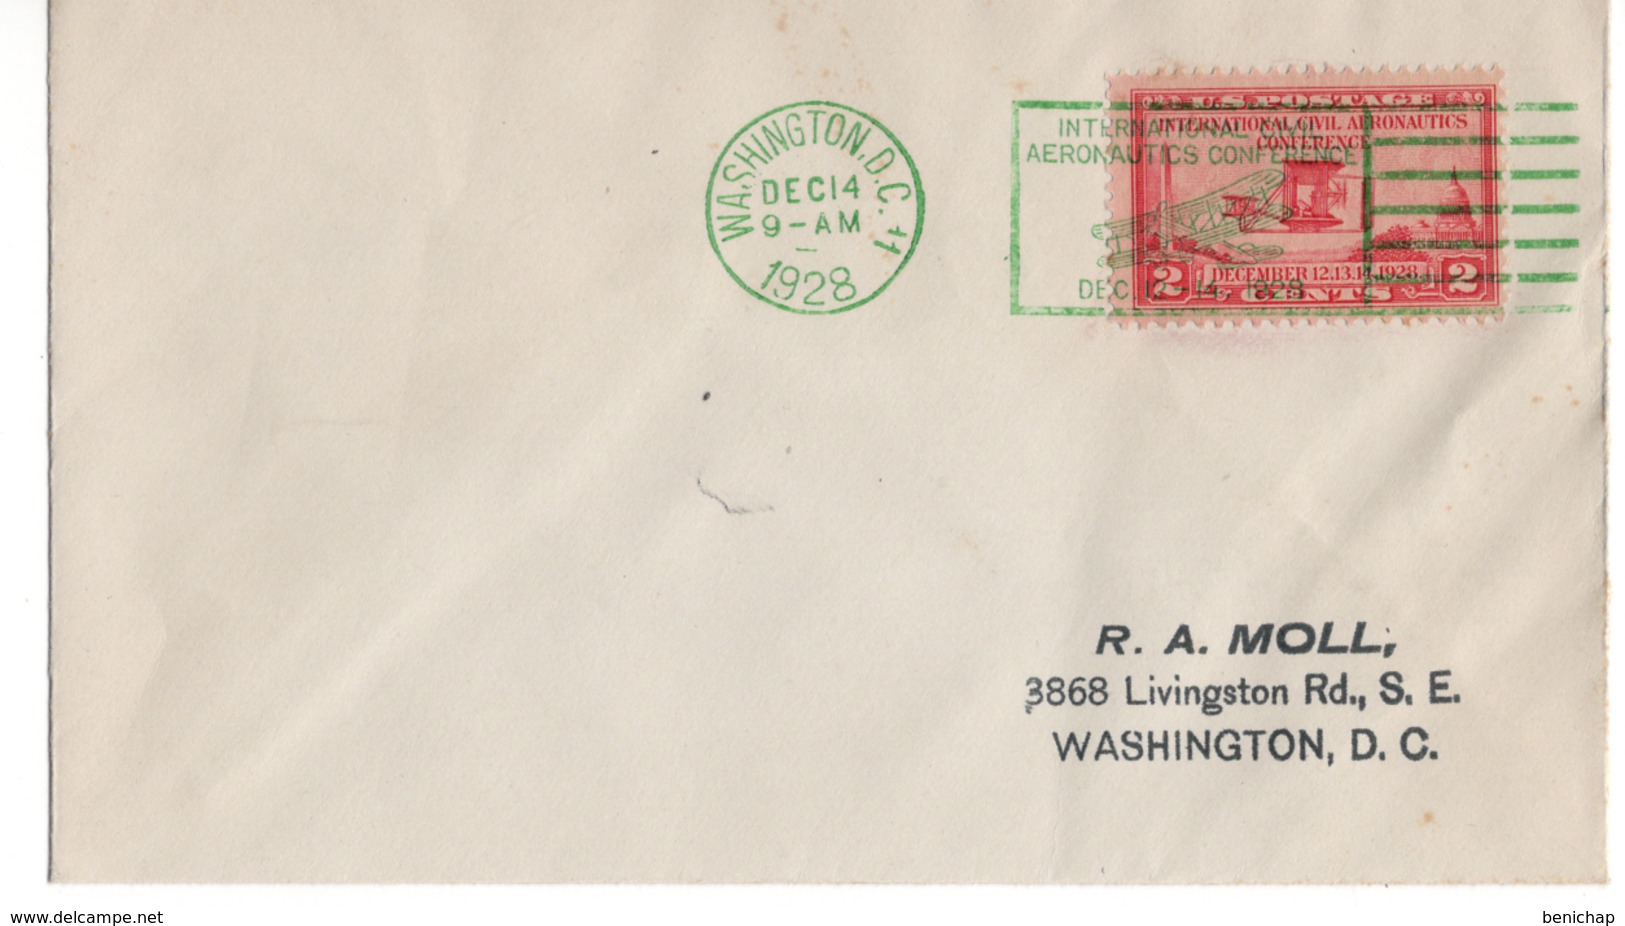 (R8) SCOTT 649 - AERONAUTICS CONFERENCE ISSUE - WRIGHT AIRPLANE - WASHINGTON D.C. - 1928 - GREEN CANCELLATION. - Enveloppes évenementielles